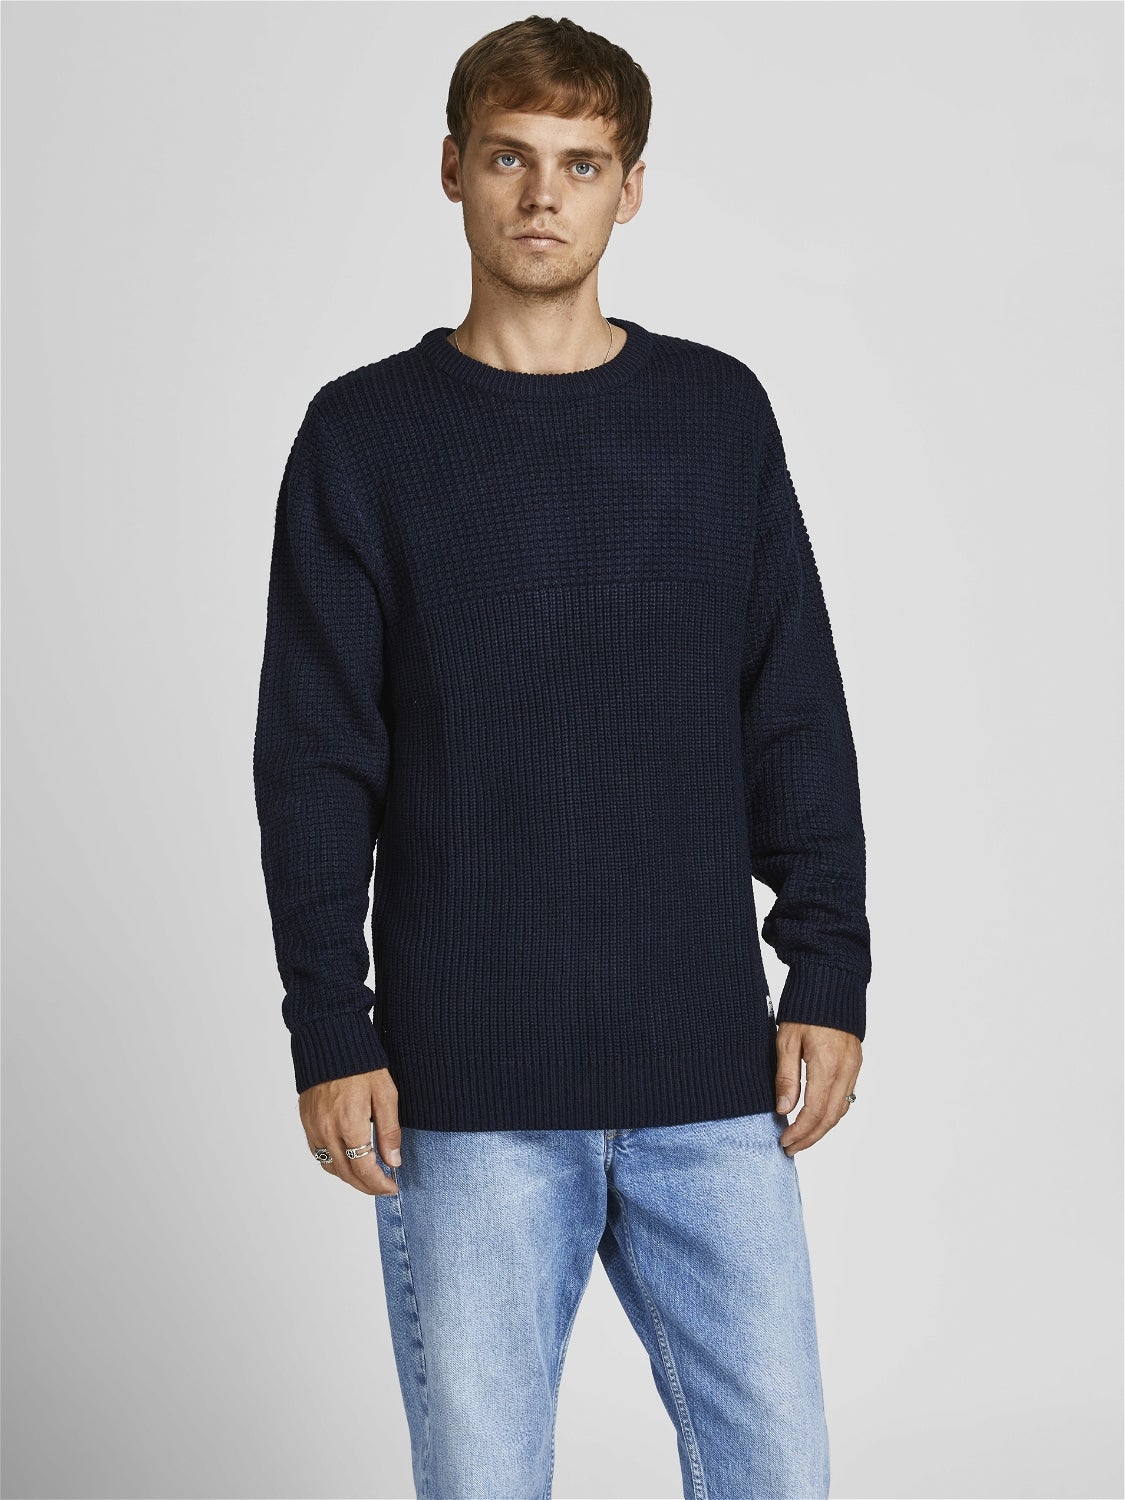 Navy Blue L Jack & Jones sweatshirt discount 57% MEN FASHION Jumpers & Sweatshirts Sports 